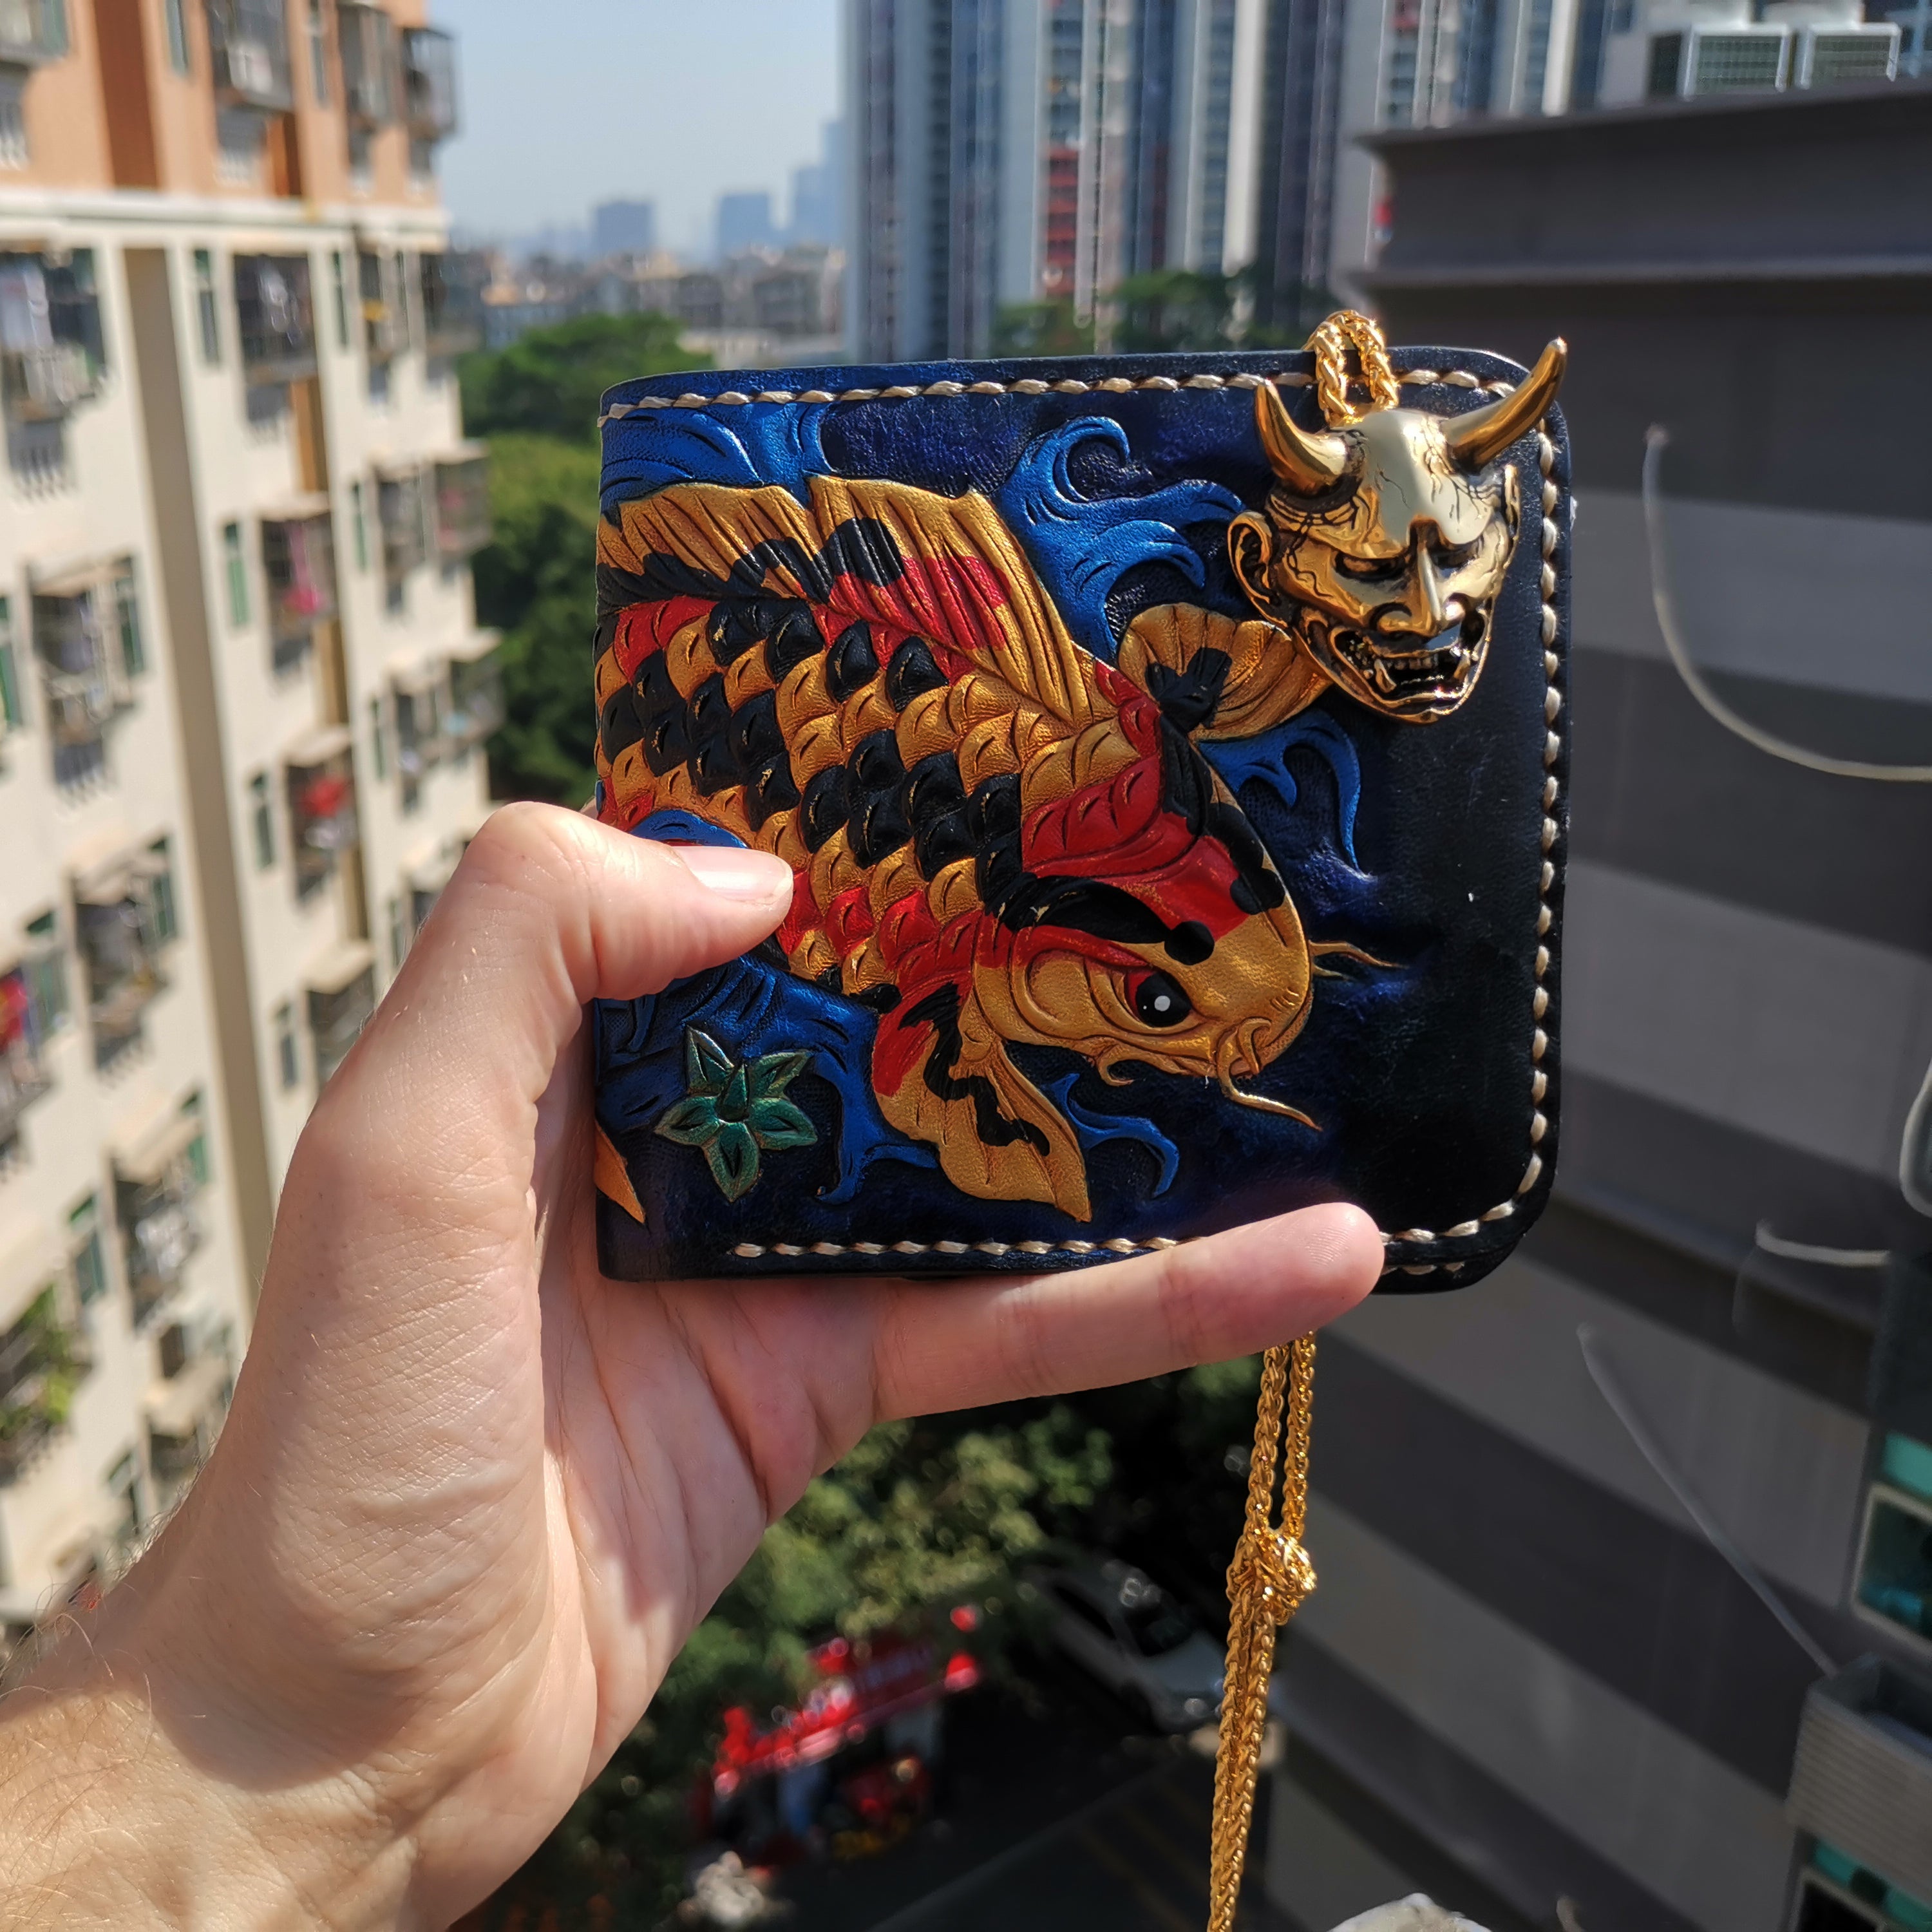 100% Handmade Leather Card Holder